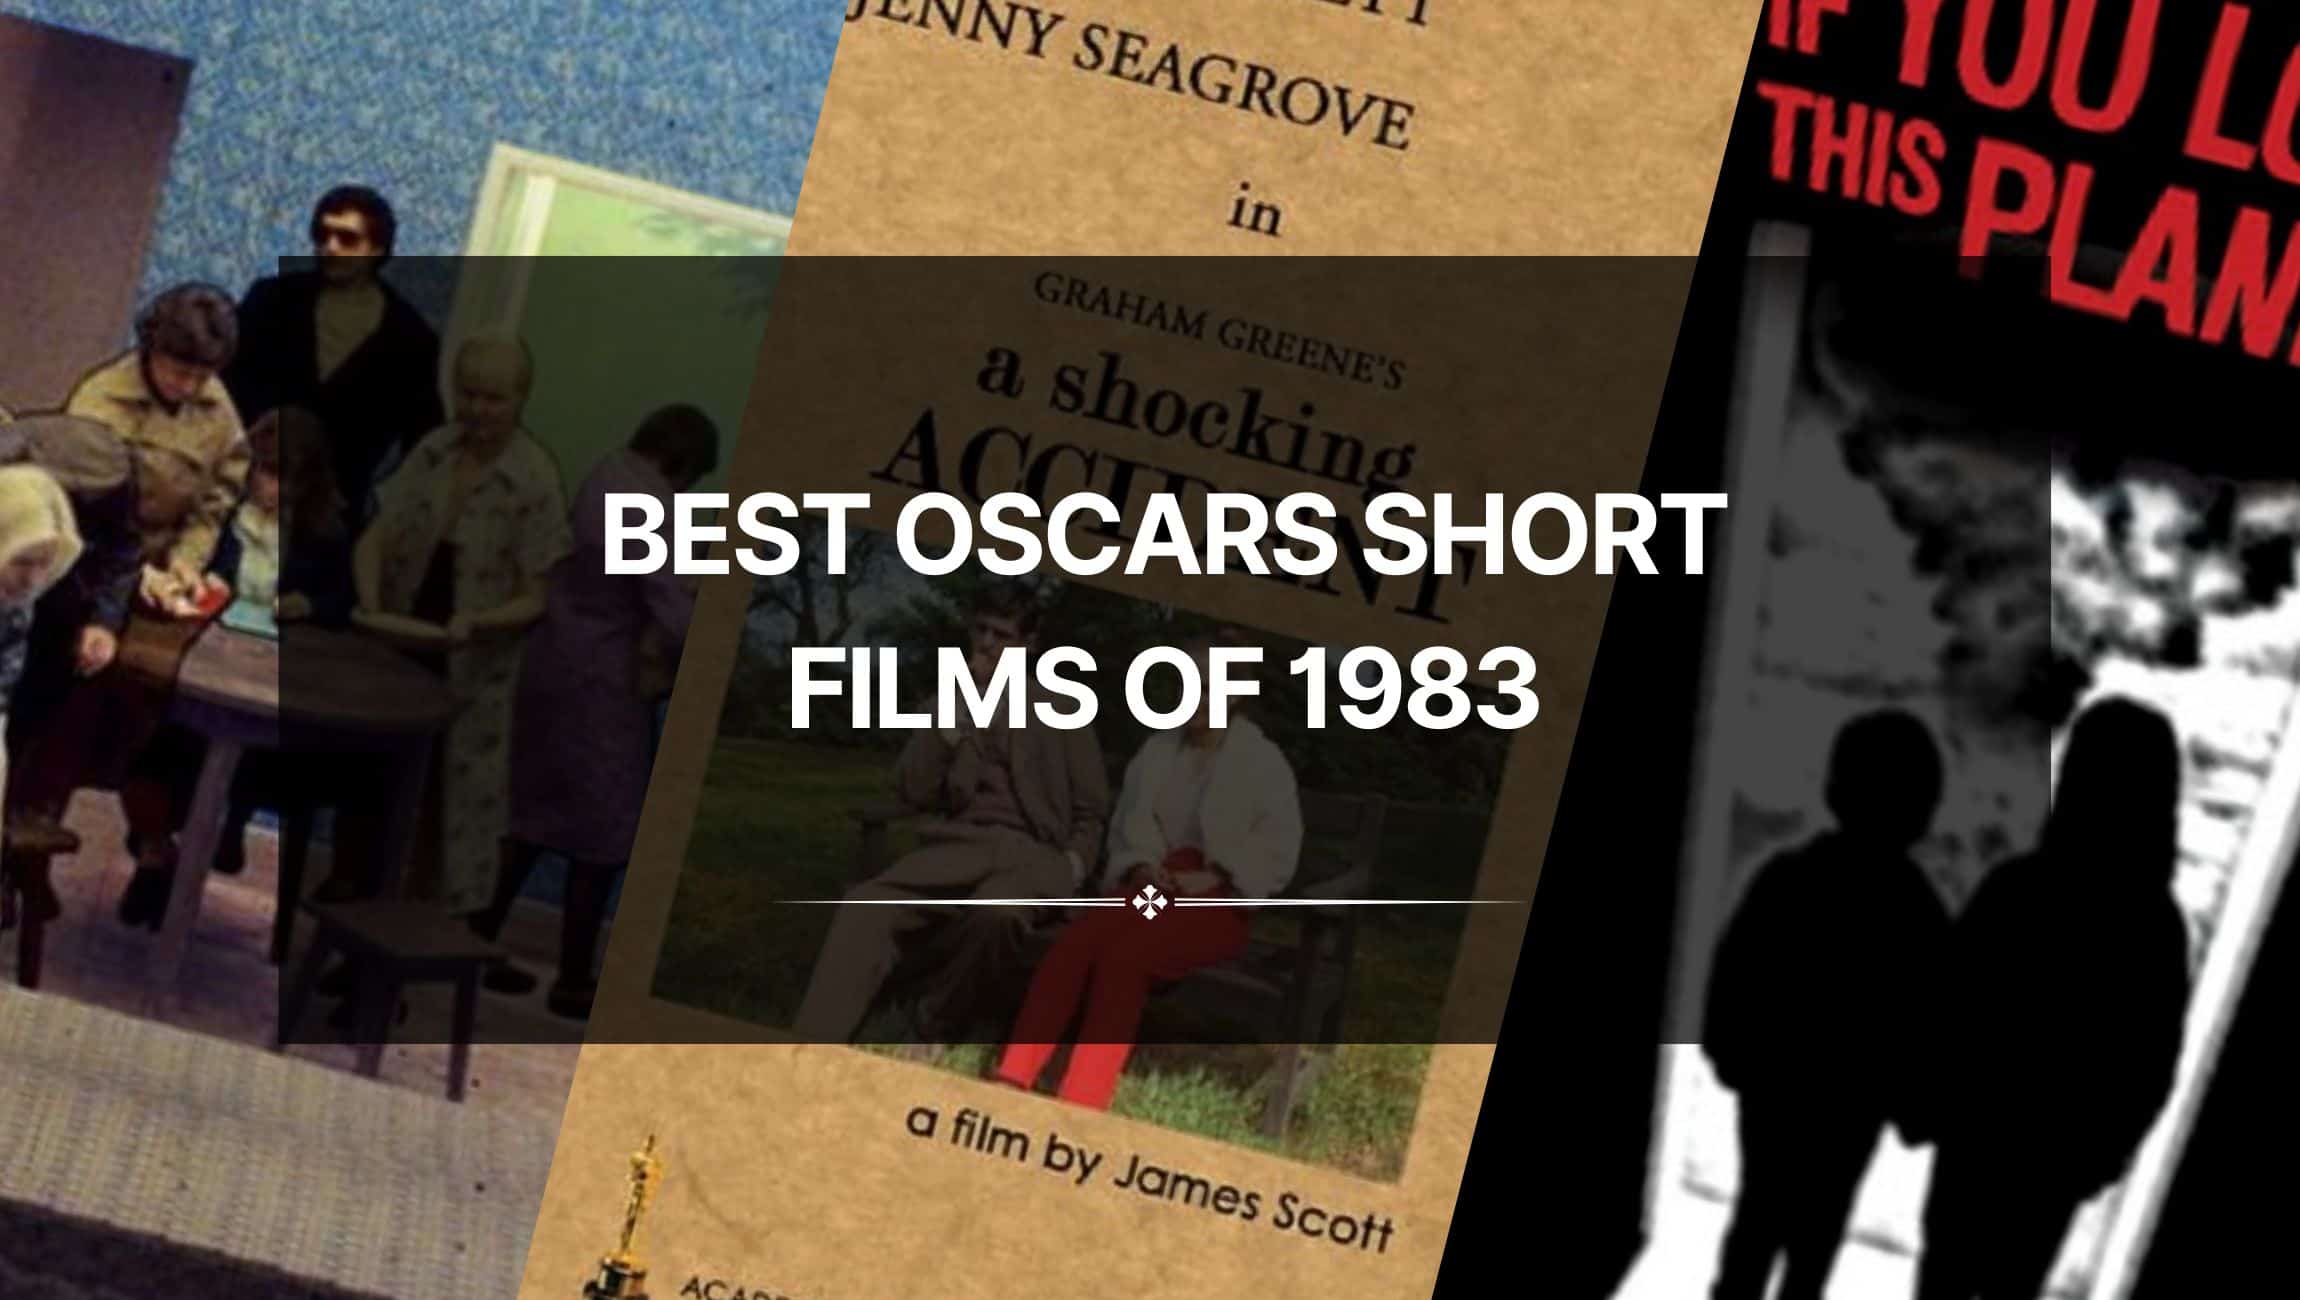 Best Oscars Short Films of 1983